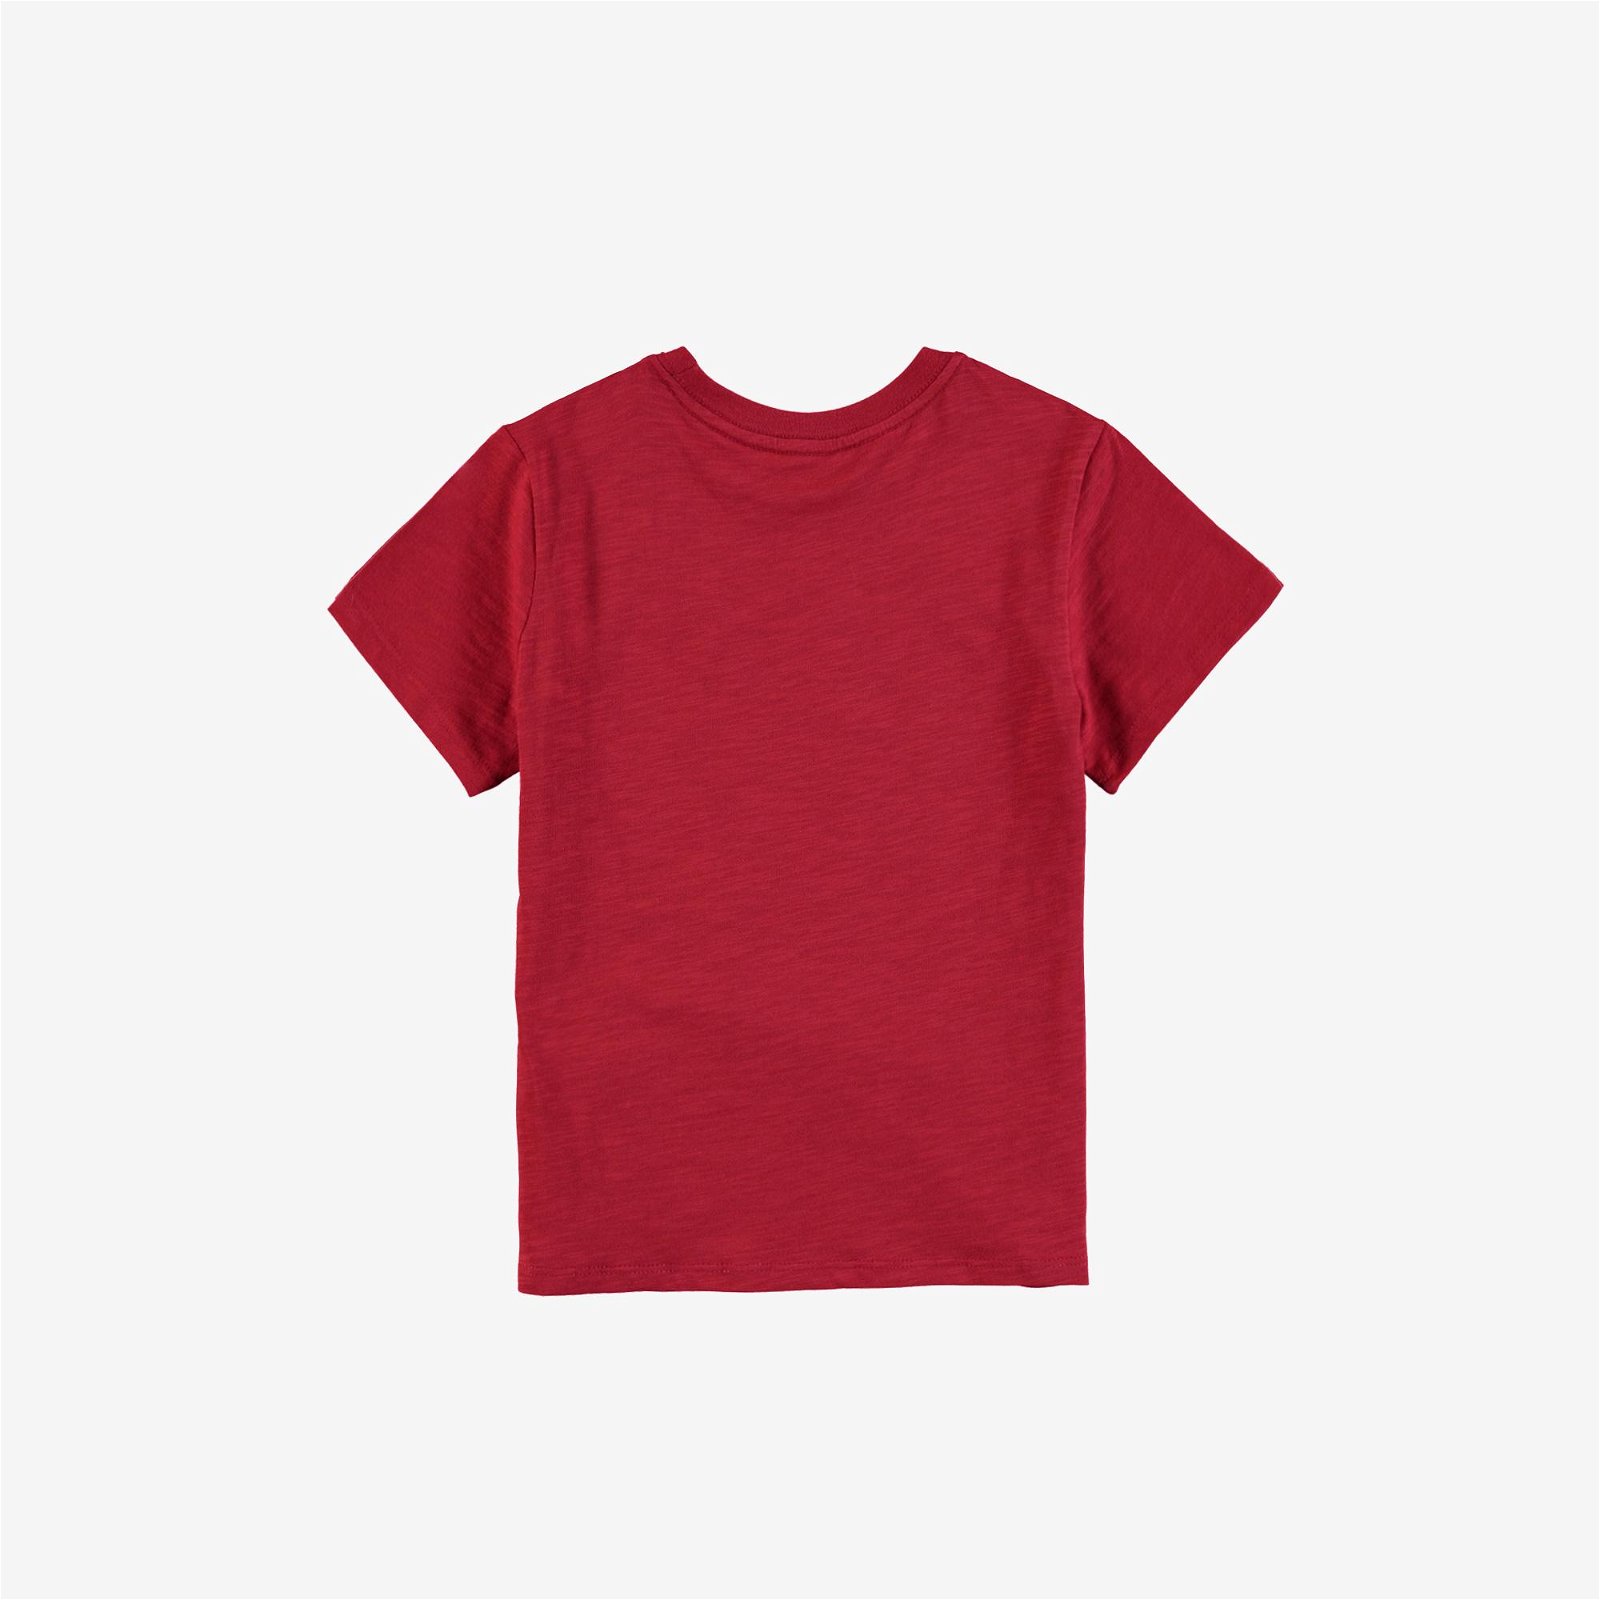 Nautica Erkek Çocuk Kırmızı T-Shirt